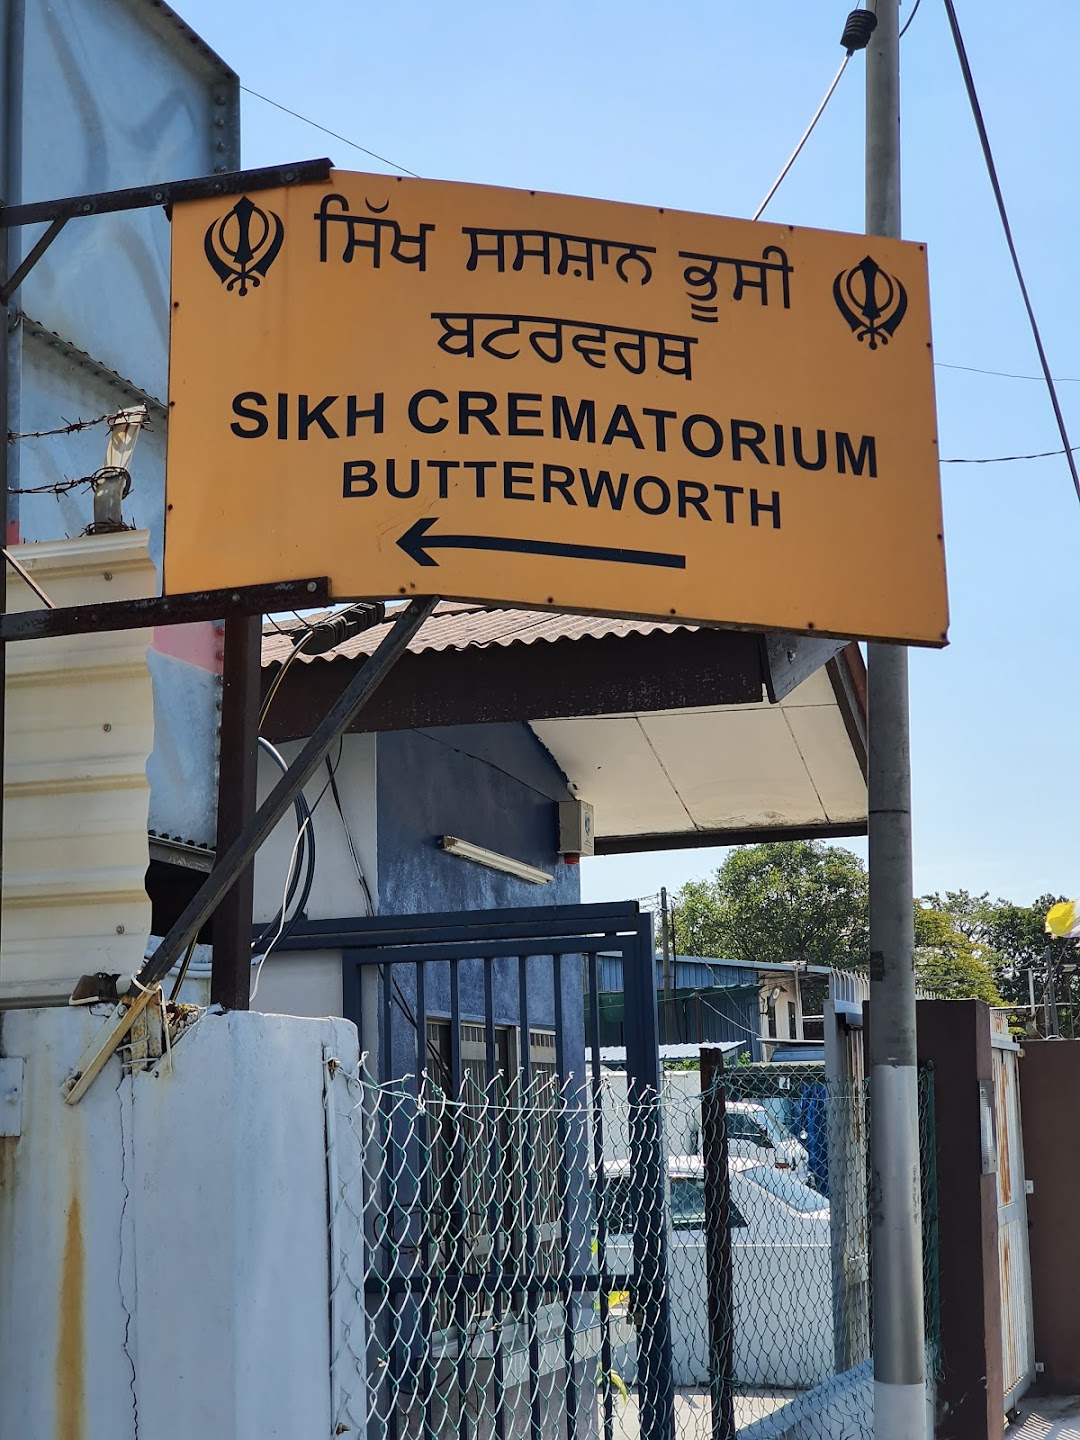 Sikh crematorium jalan siram